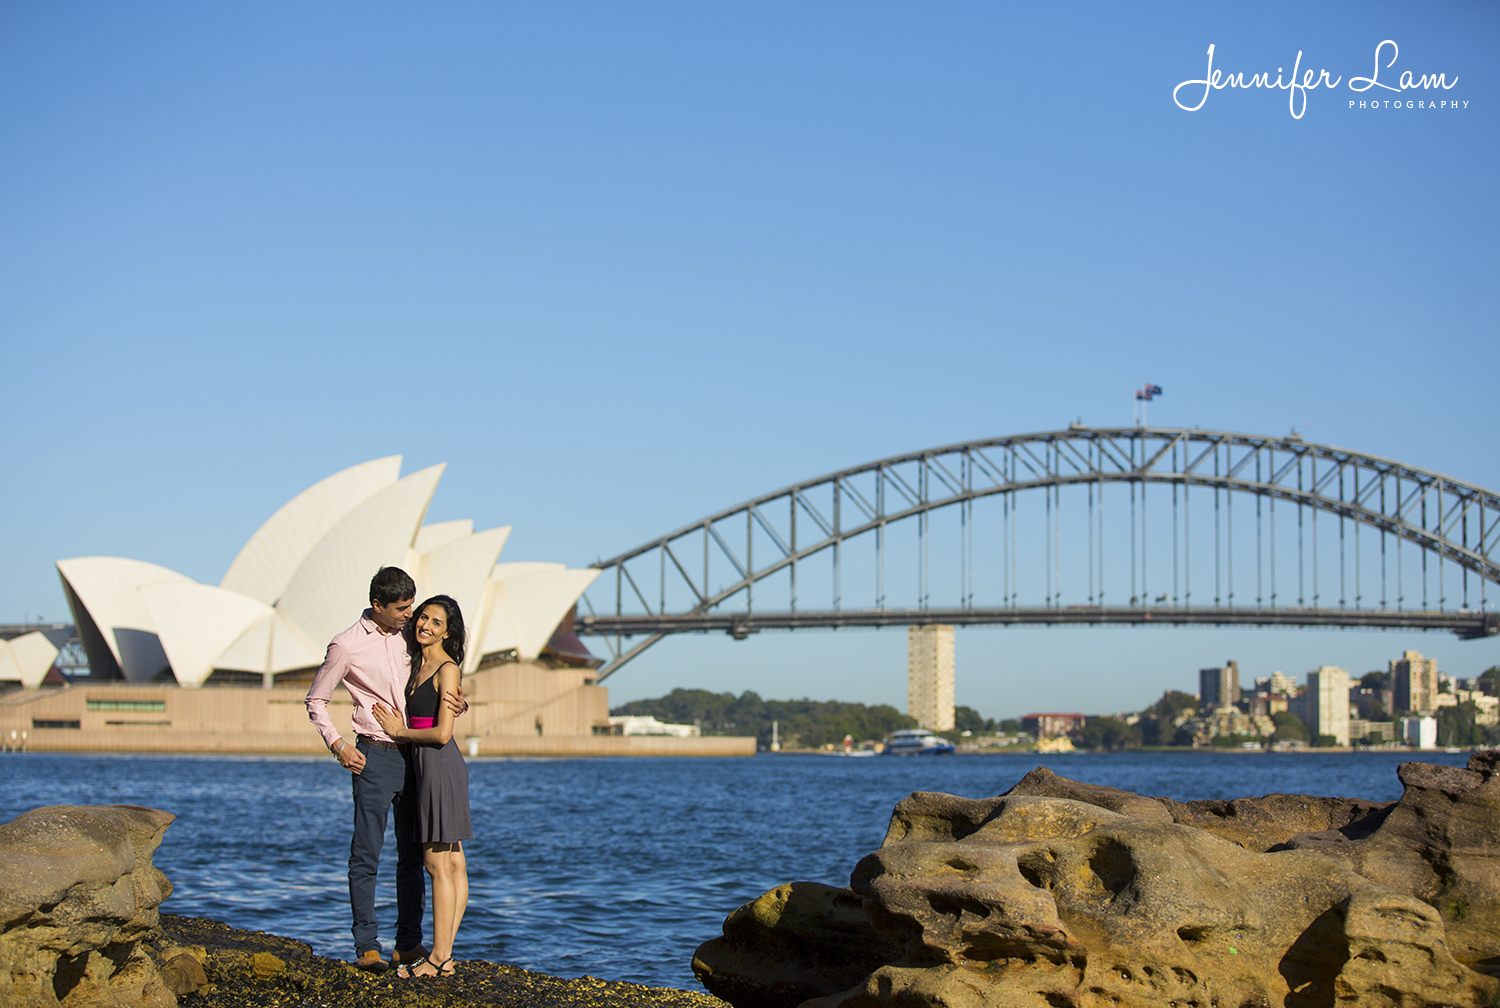 S&J - Jennifer Lam Photography - Sydney Wedding Photographer (1).jpg